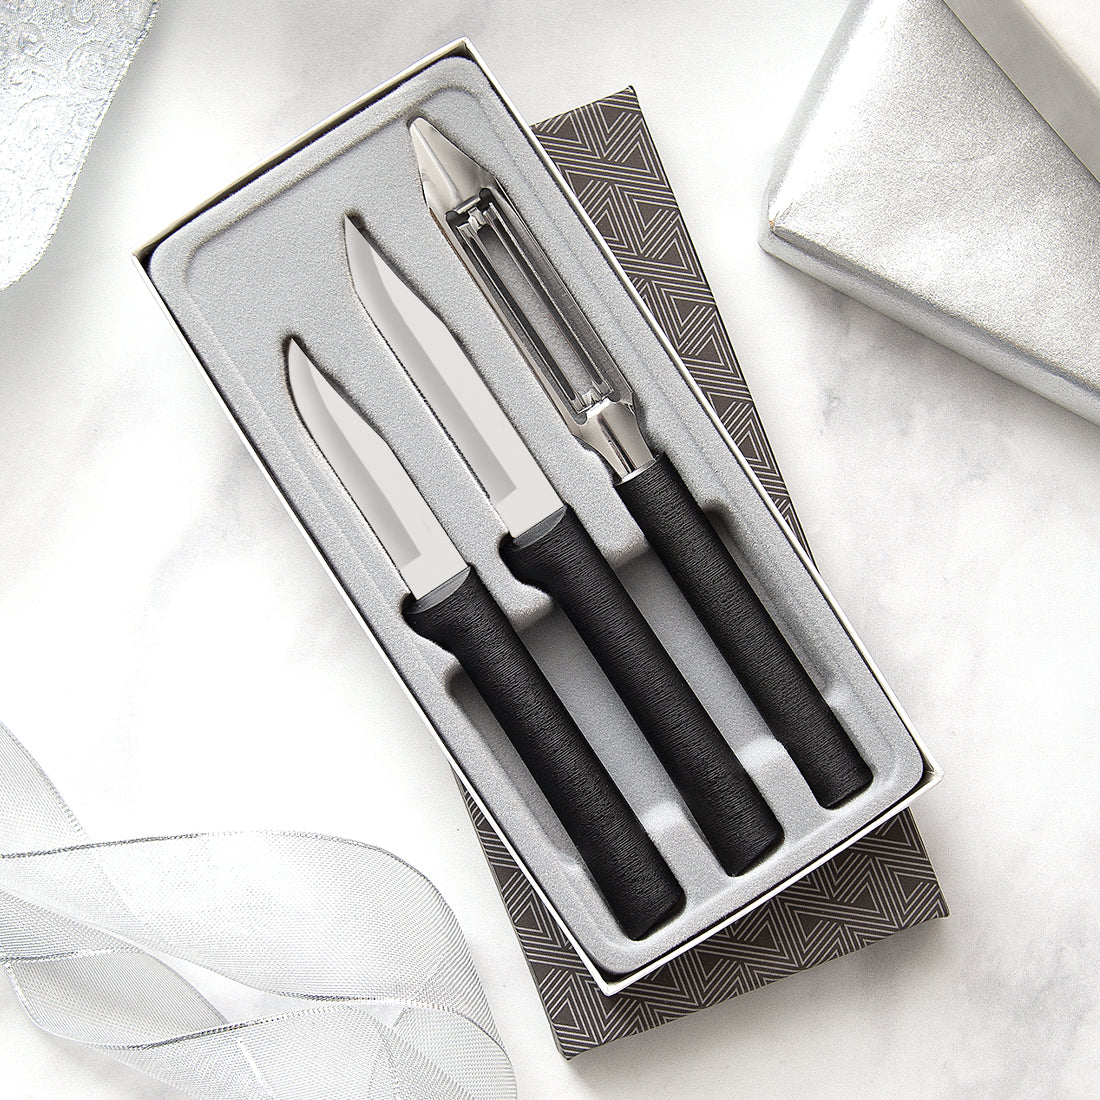  Rada Cutlery S38 7-pc Starter Gift Set + R119 Knife Sharpener:  Boxed Knife Sets: Home & Kitchen